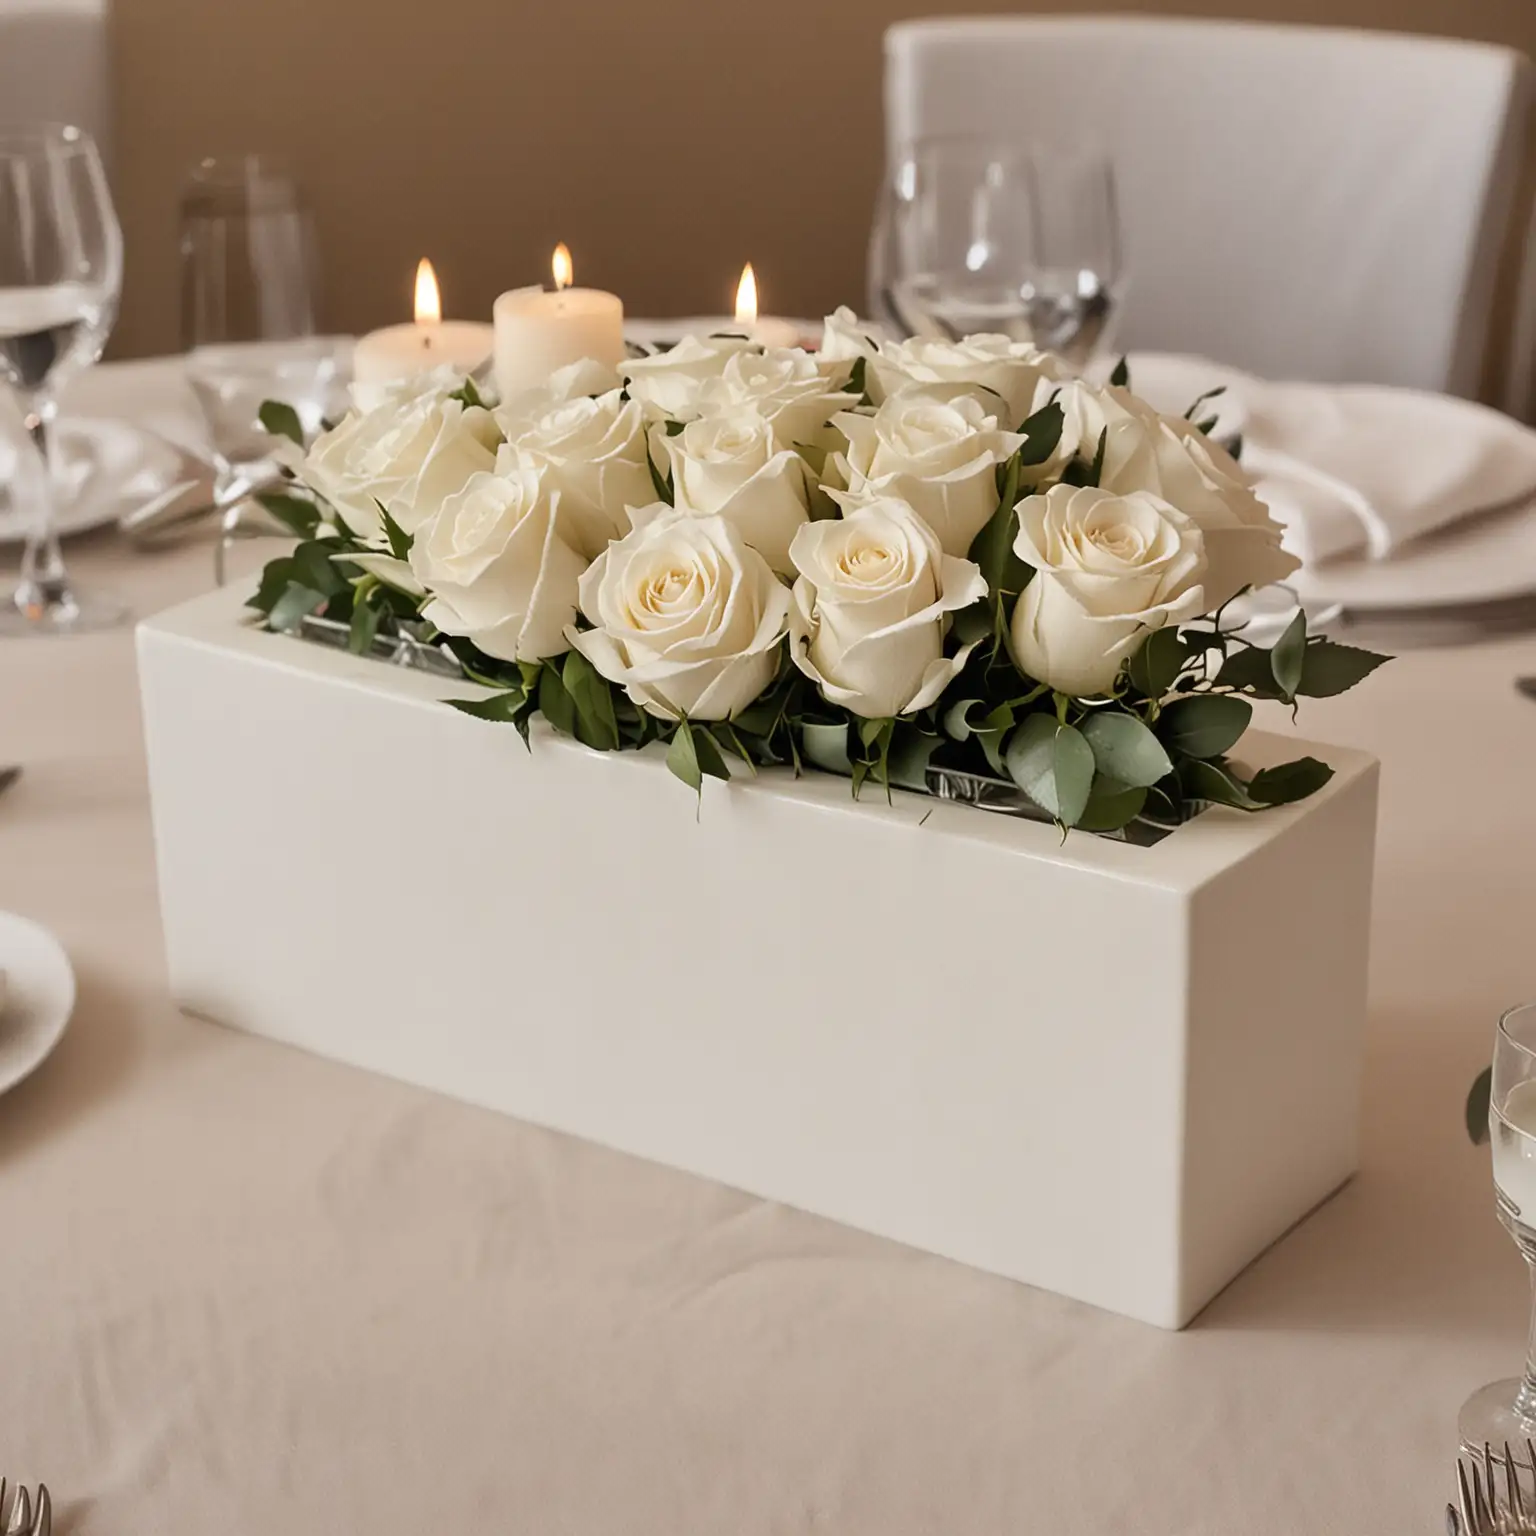 modern elegant wedding centerpiece with a sleek modern white rectangle vase holding white roses and white candle